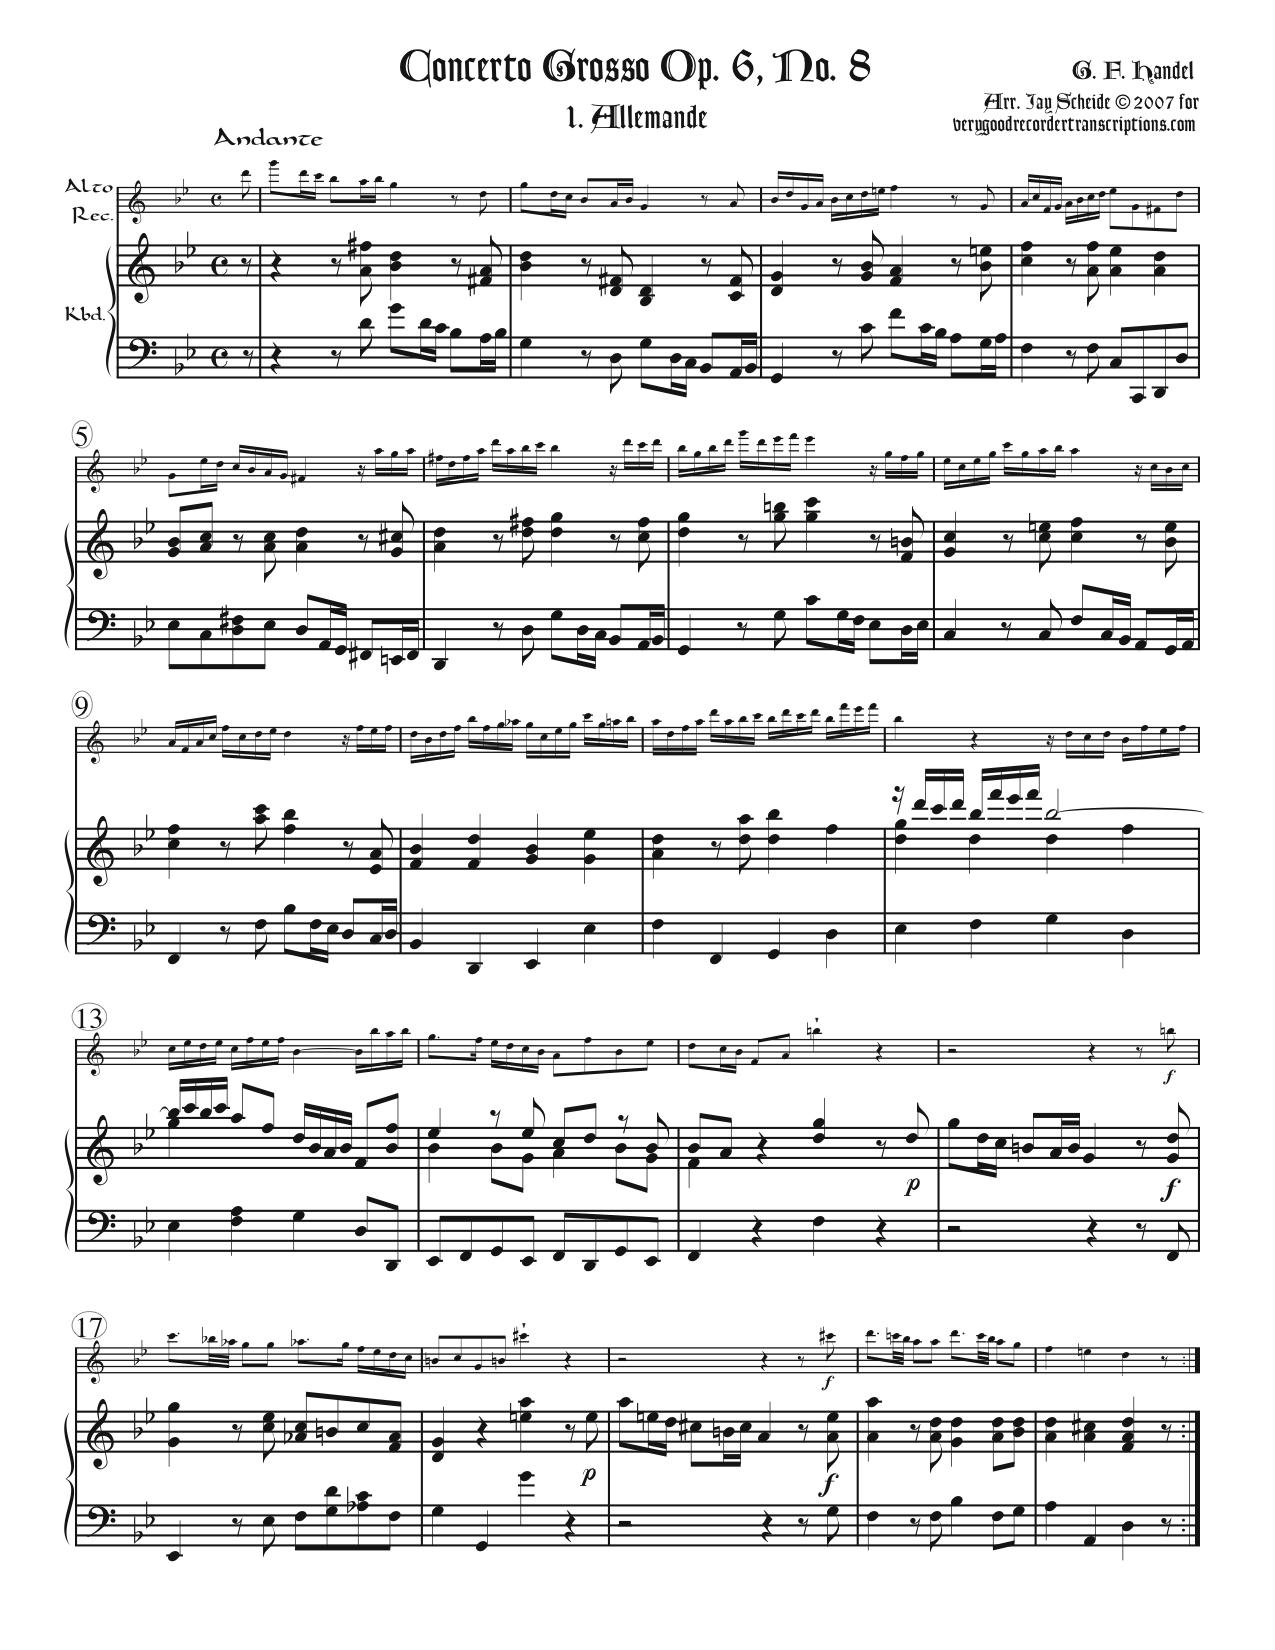 Allemande from Concerto Grosso, Op. 6, No. 8